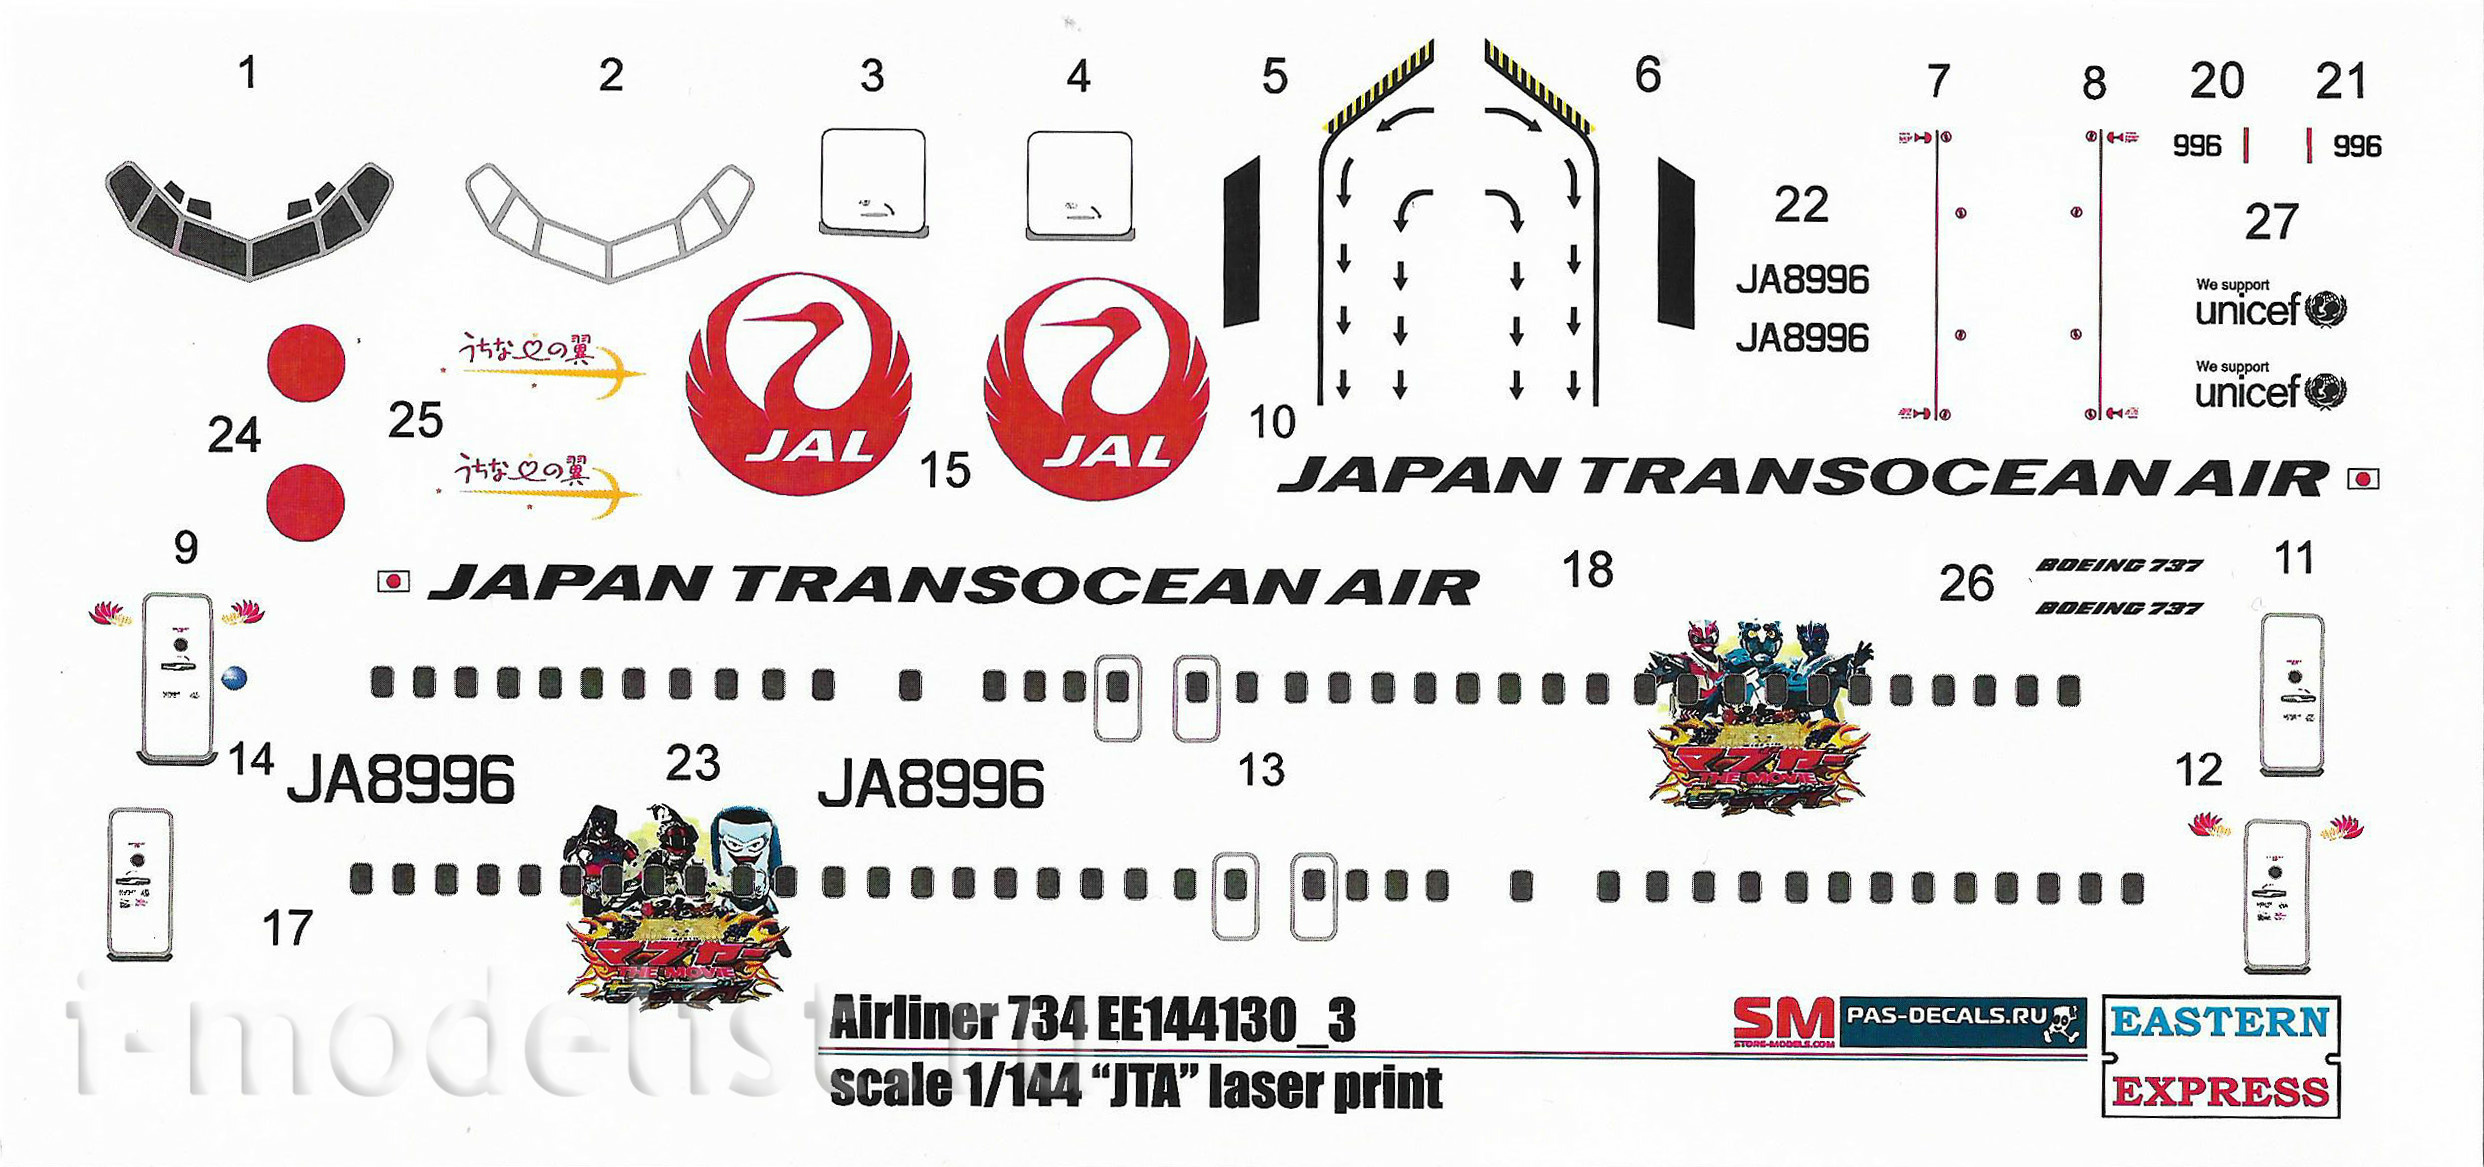 144130-3 Orient Express 1/144 Airliner 737-400 Japan Transocean Air